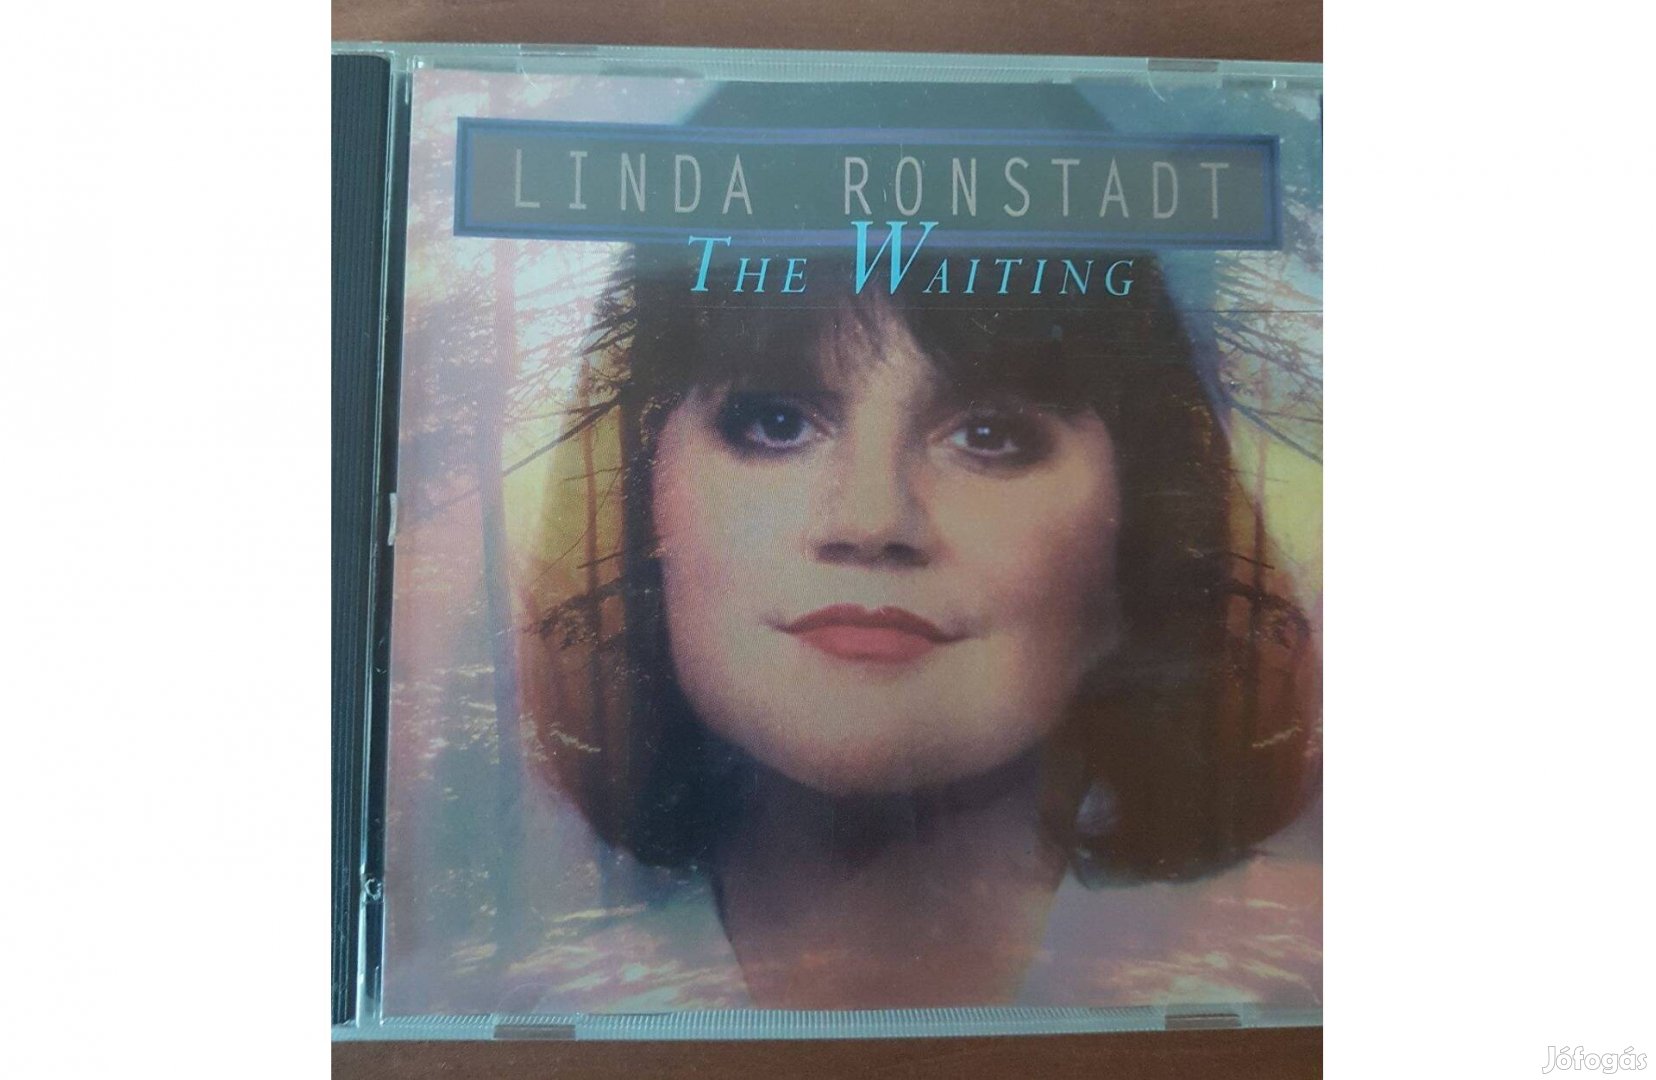 Linda Ronstadt - The Waiting CD